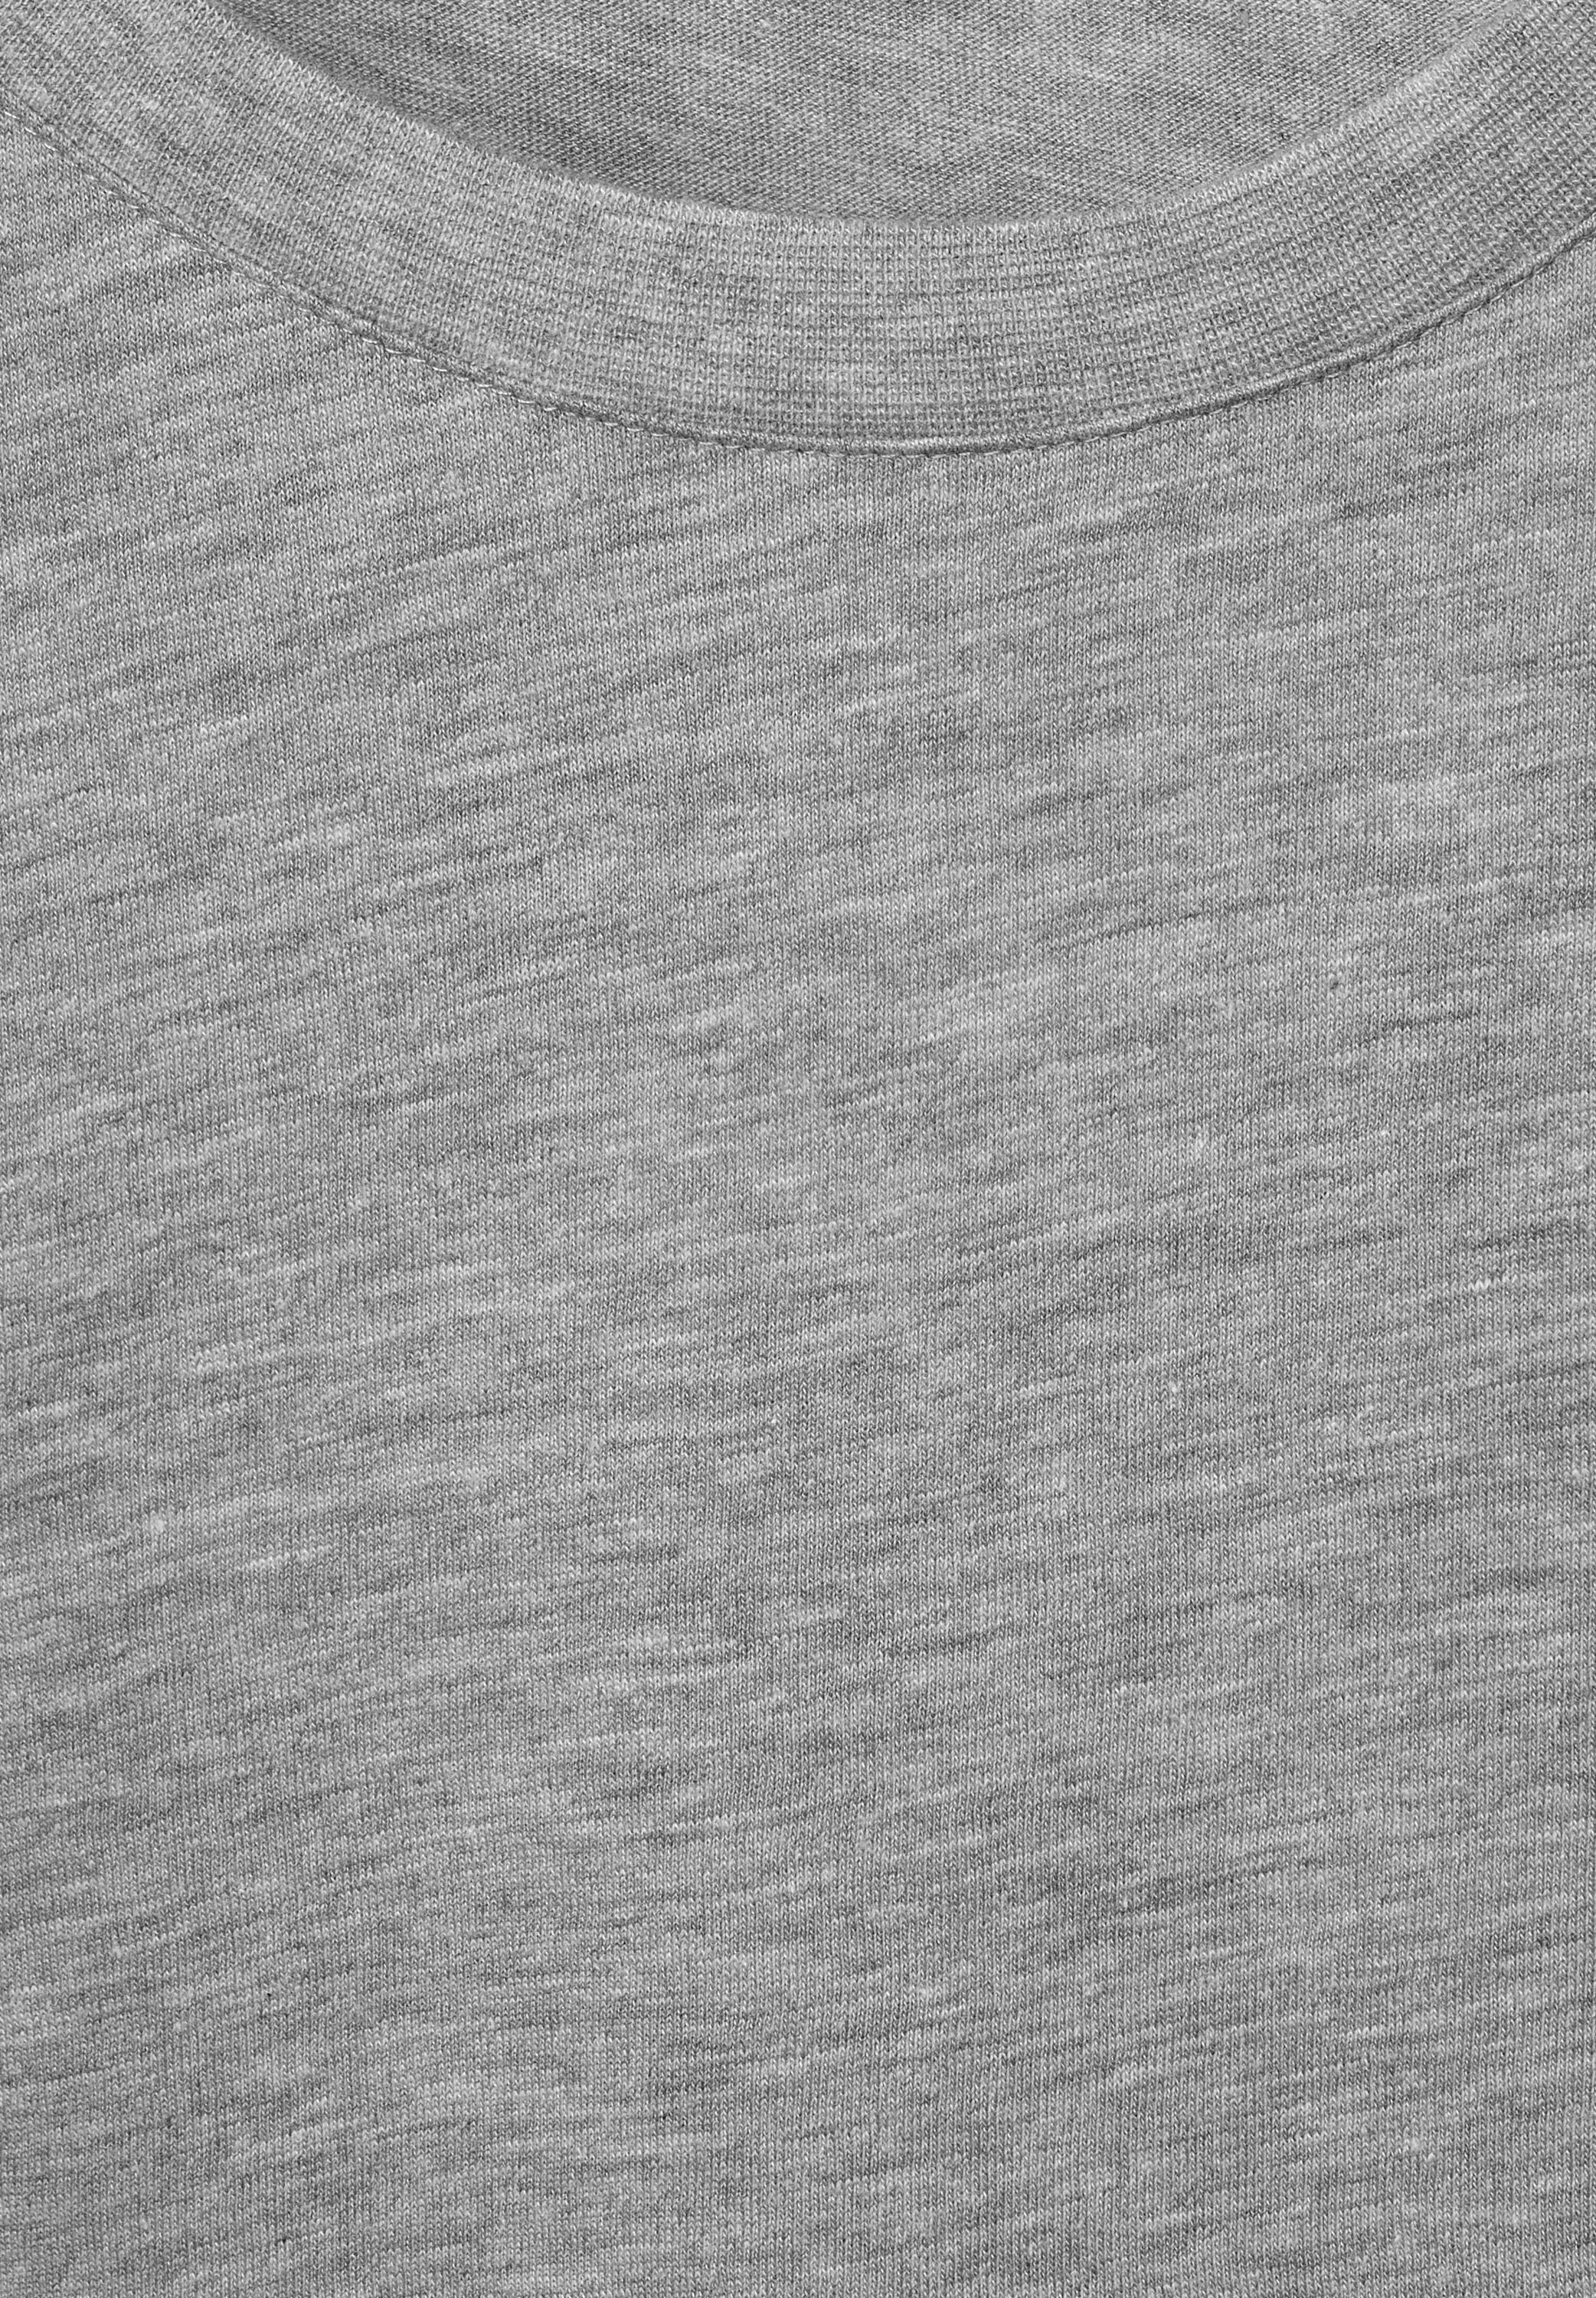 STREET Optik T-Shirt Melange in melange grey ONE MEN silver